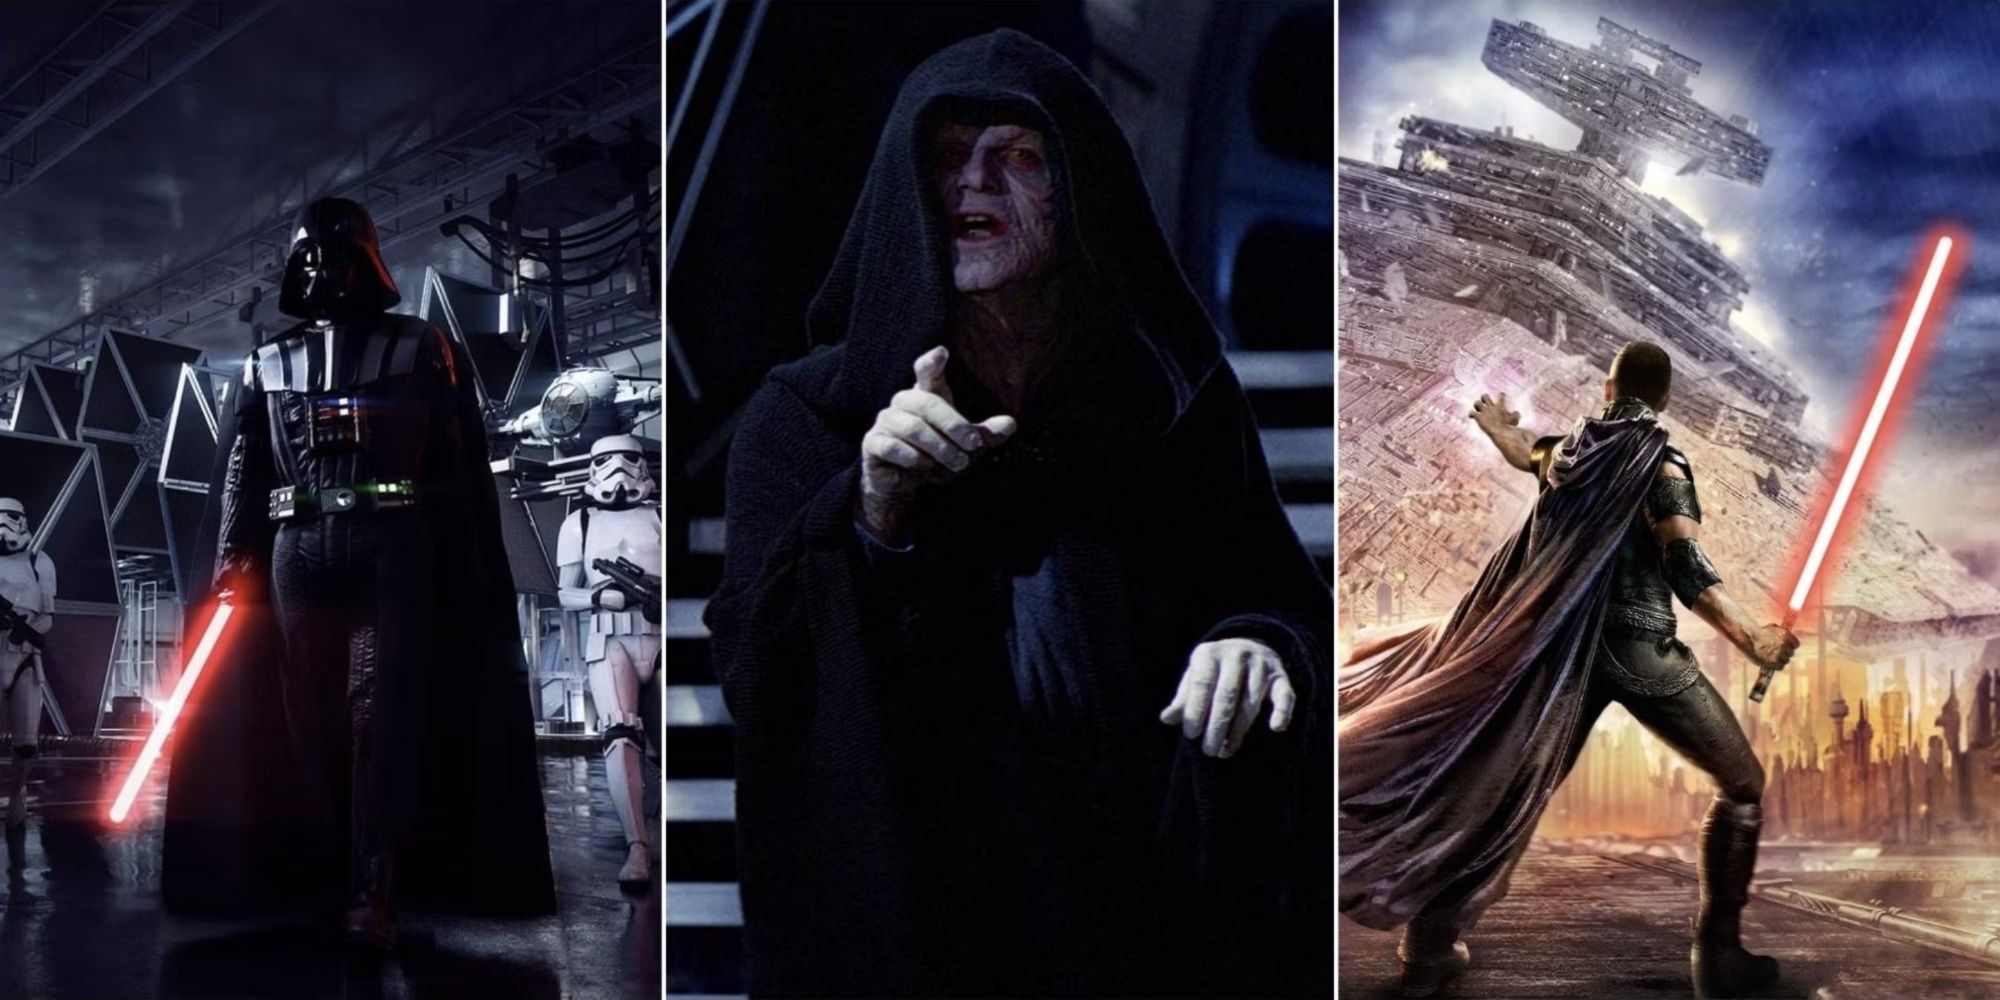 Dark Side Users Darth Vader, The Emperor and Starkiller